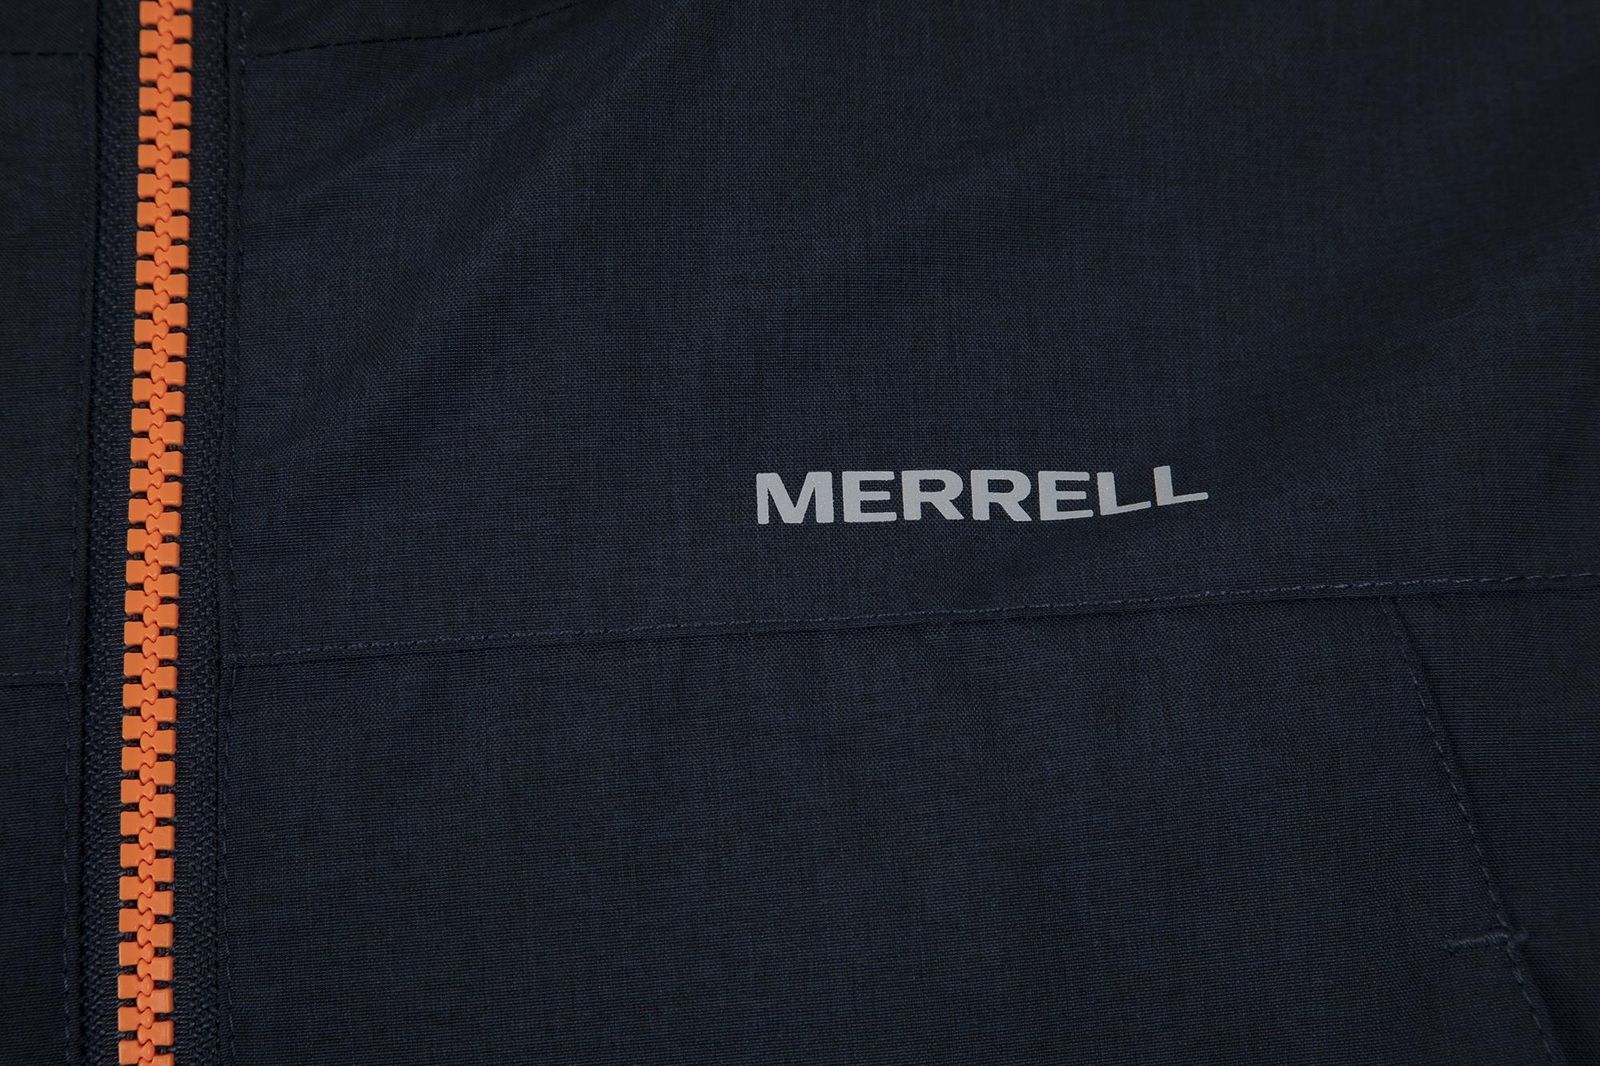   Merrell Men's Windbreaker, : -. S19AMRJAM04-Z4.  48